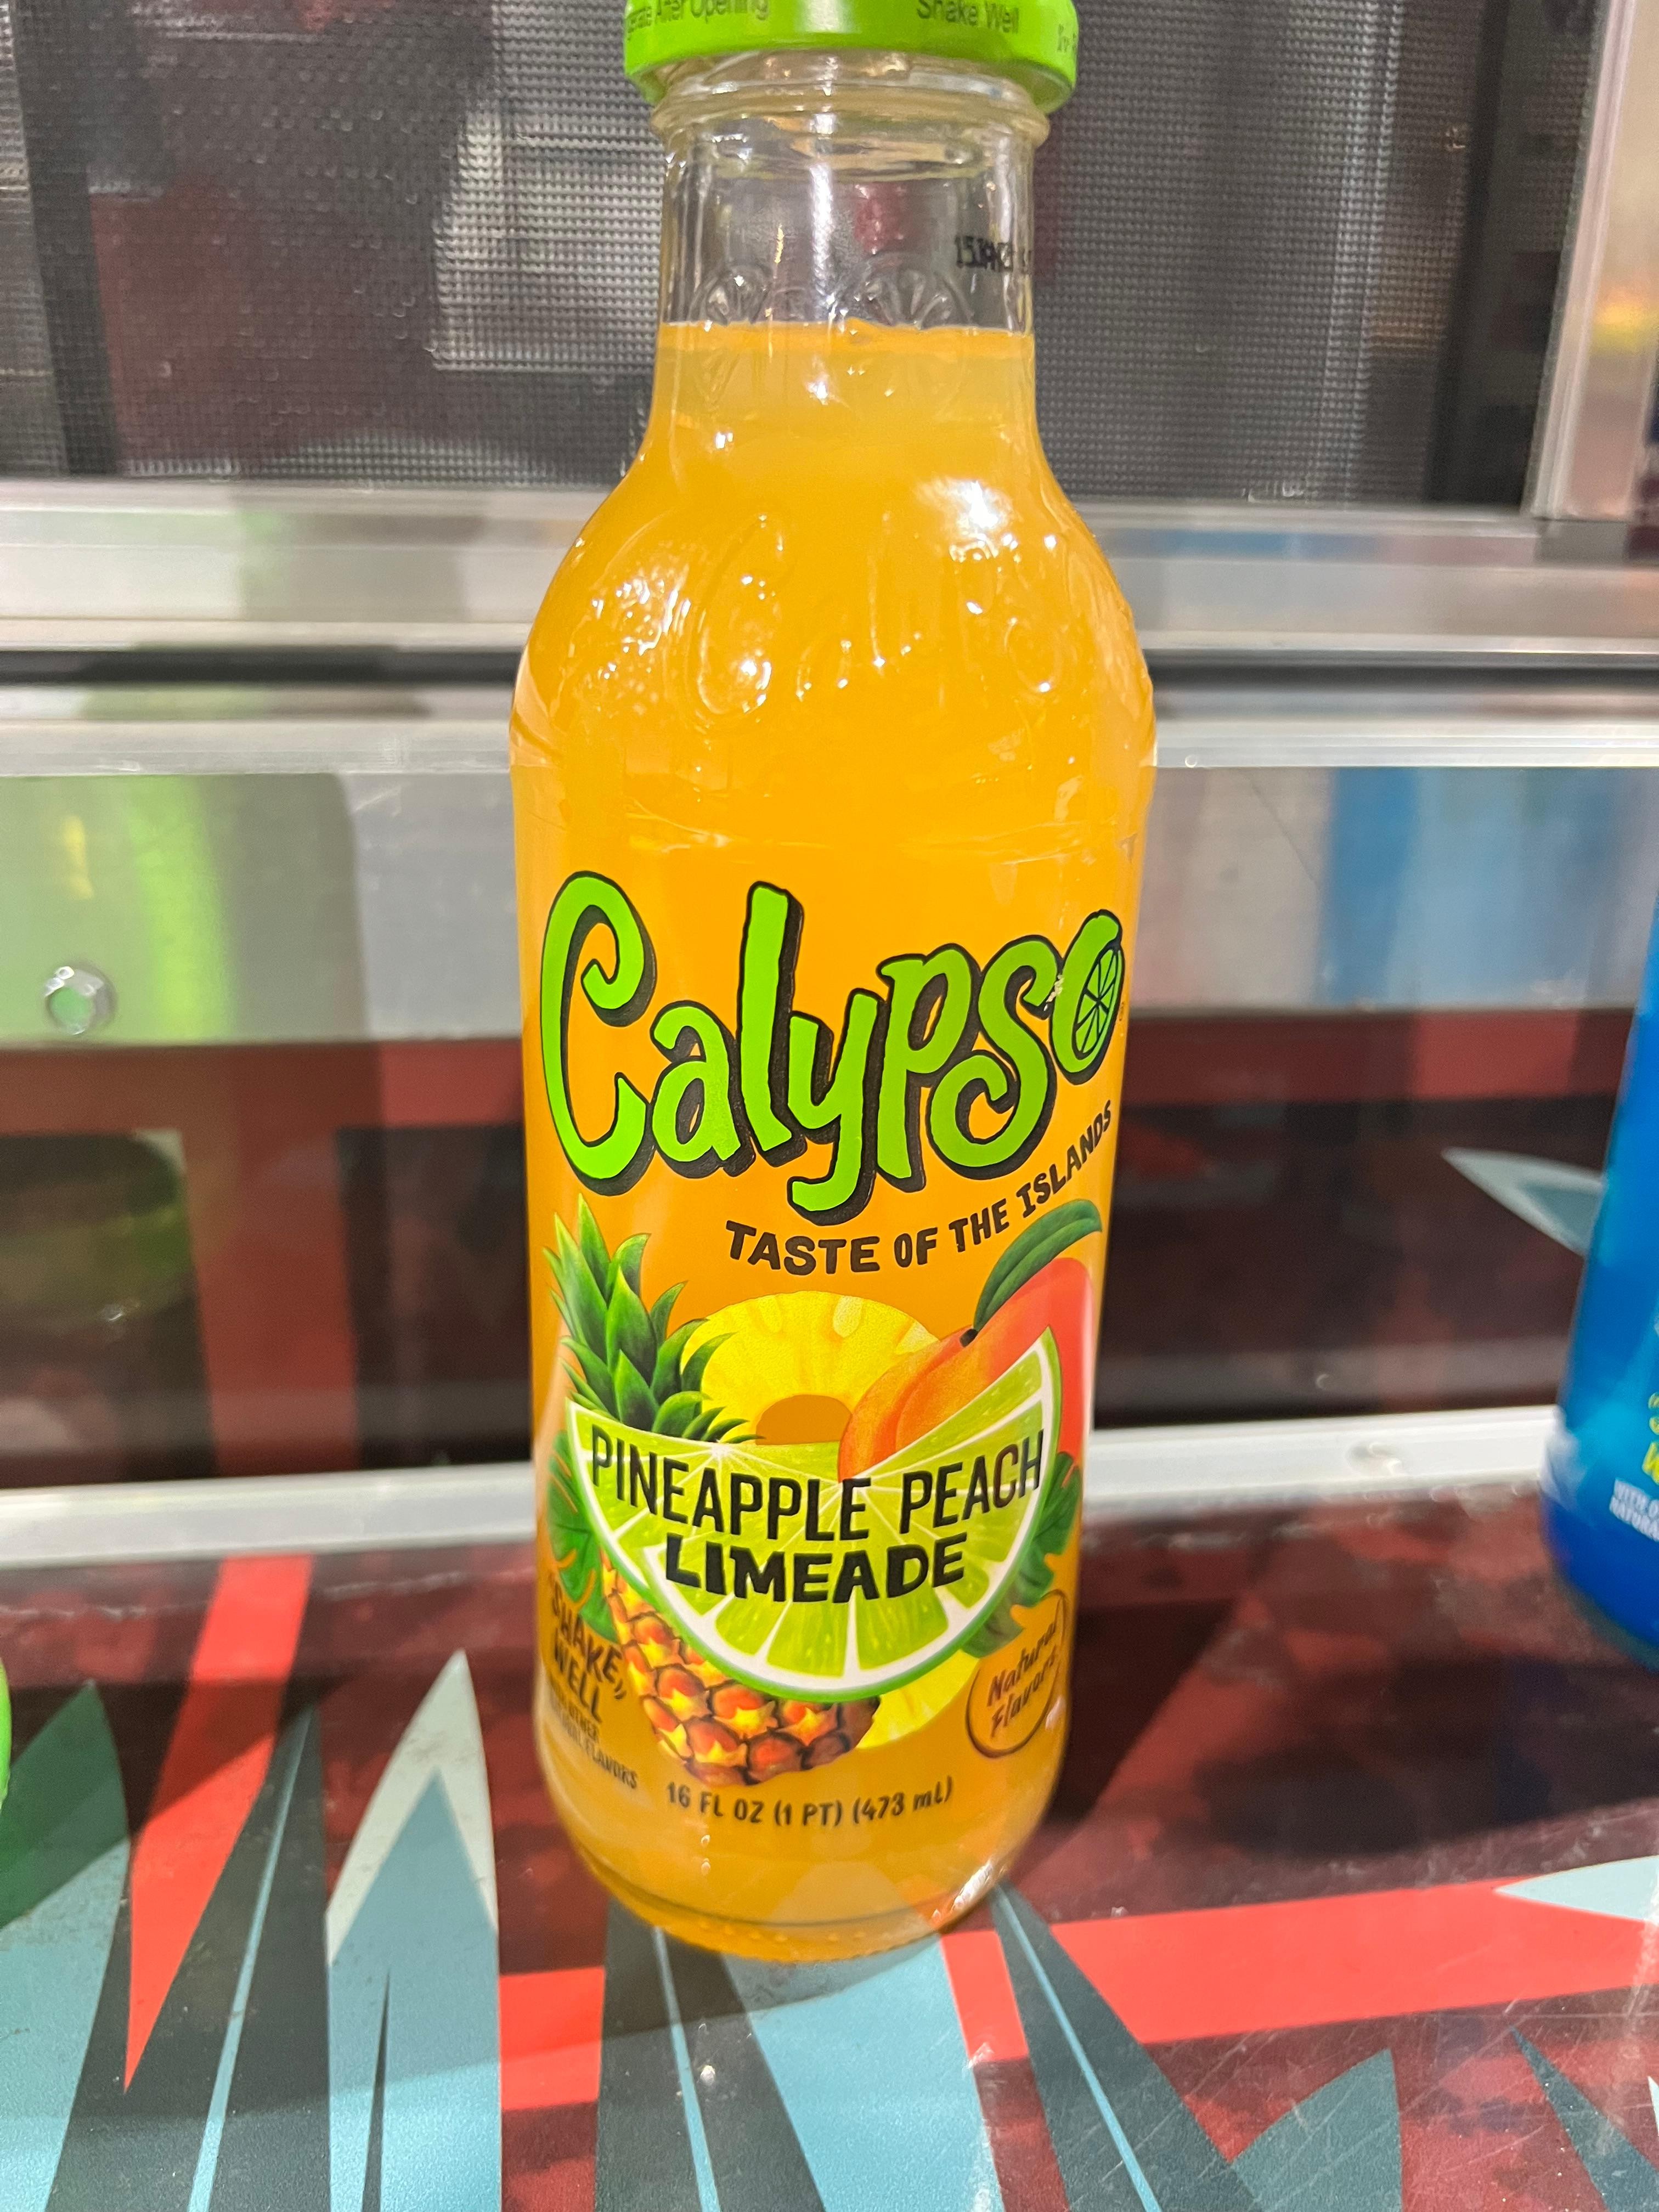 Calypso Pineapple Peach Limeade